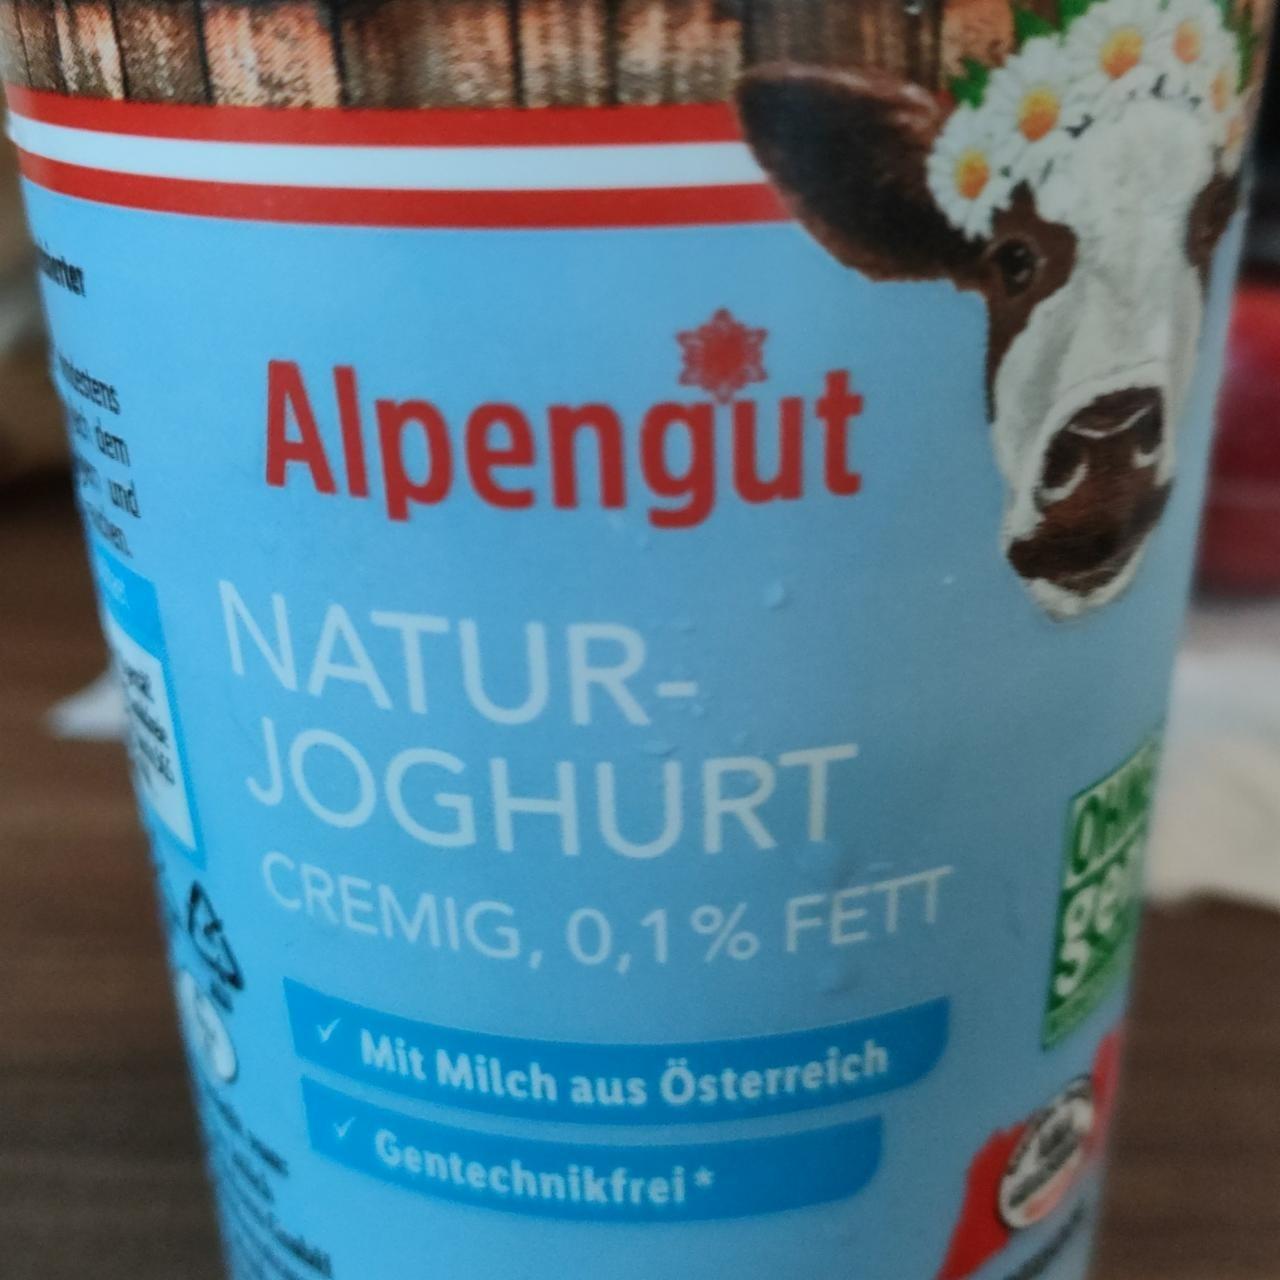 Fotografie - Alpengut Natur-joghurt Cremig, 0,1% Fett